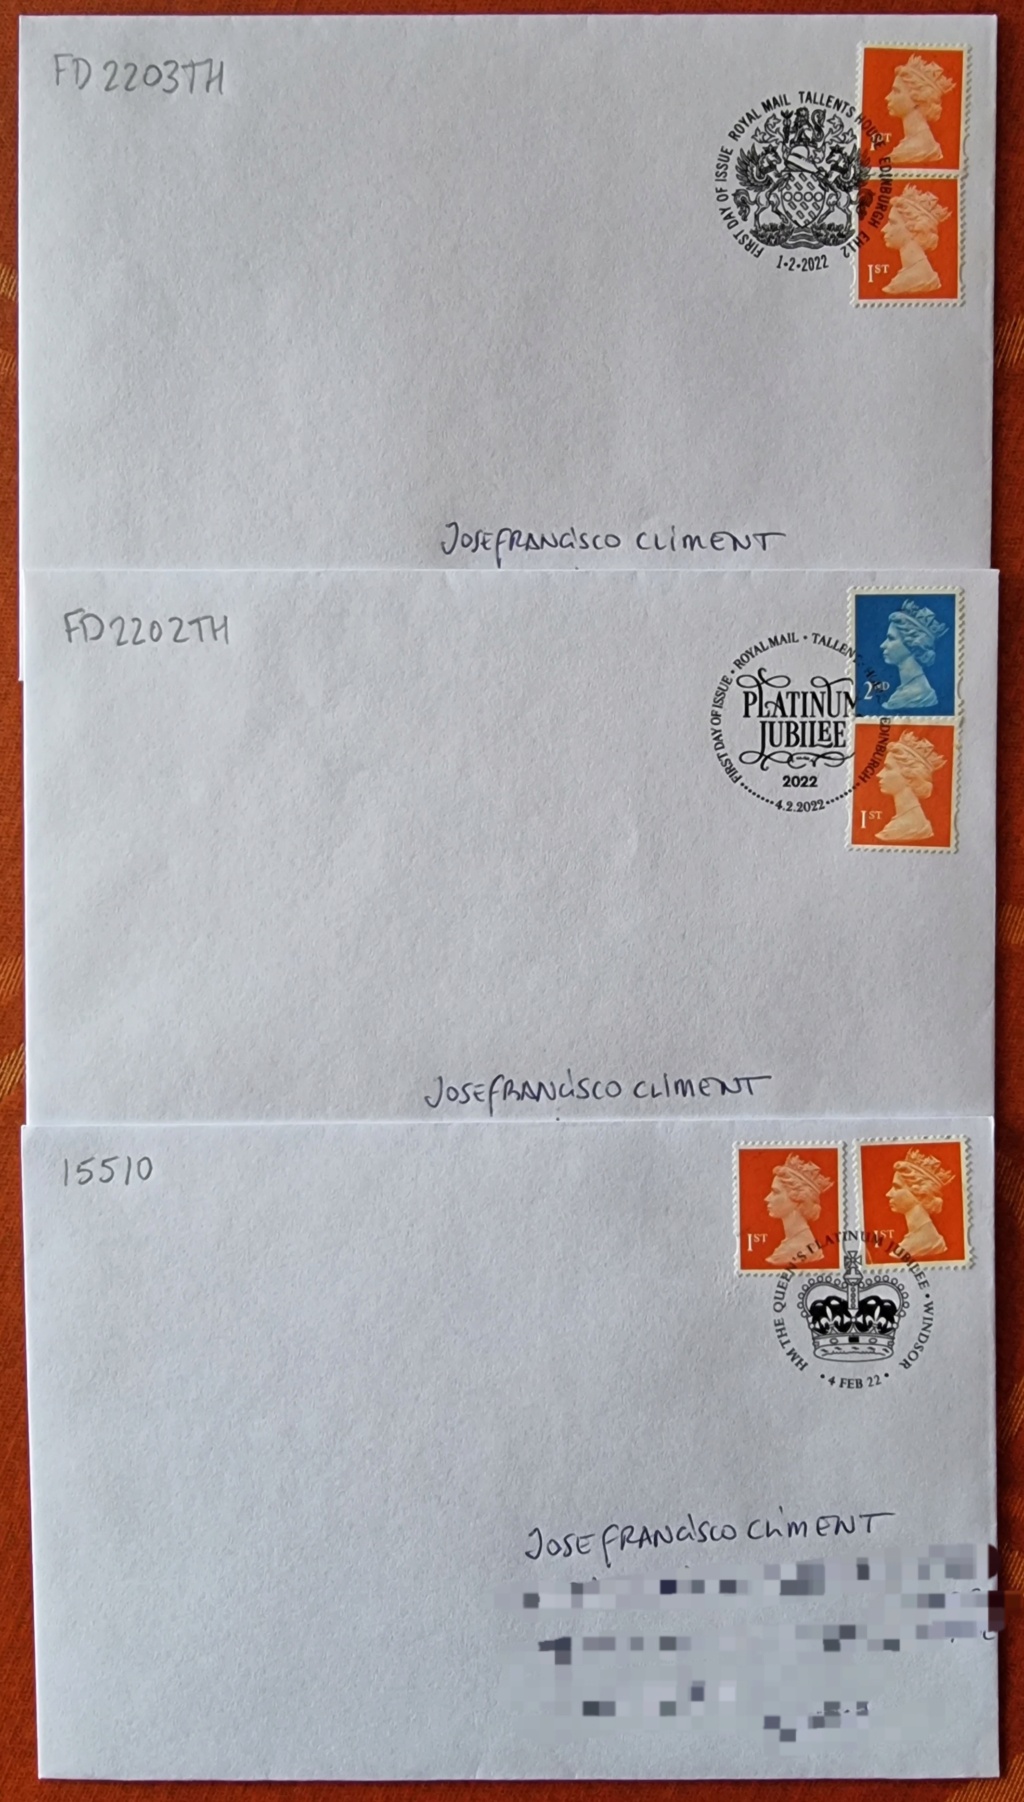 REINO UNIDO - Matasellos conmemorativos del Royal Mail 20220335